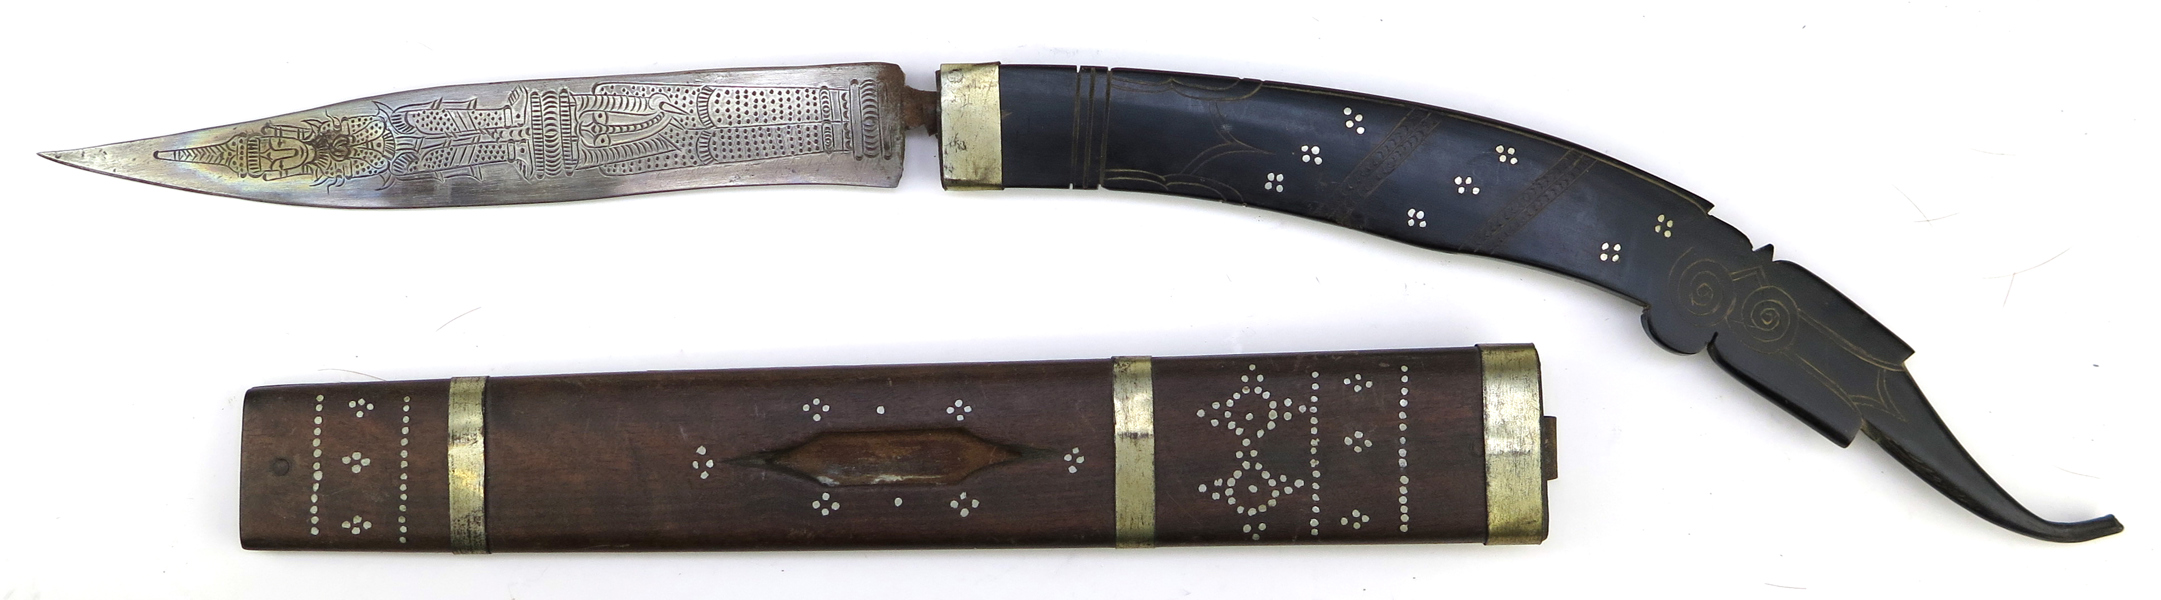 Kniv i balja, trä, horn och smide, så kallad Chin, Burma, 1900-tal. rikt dekorerad klinga, total l 63 cm_31974a_lg.jpeg